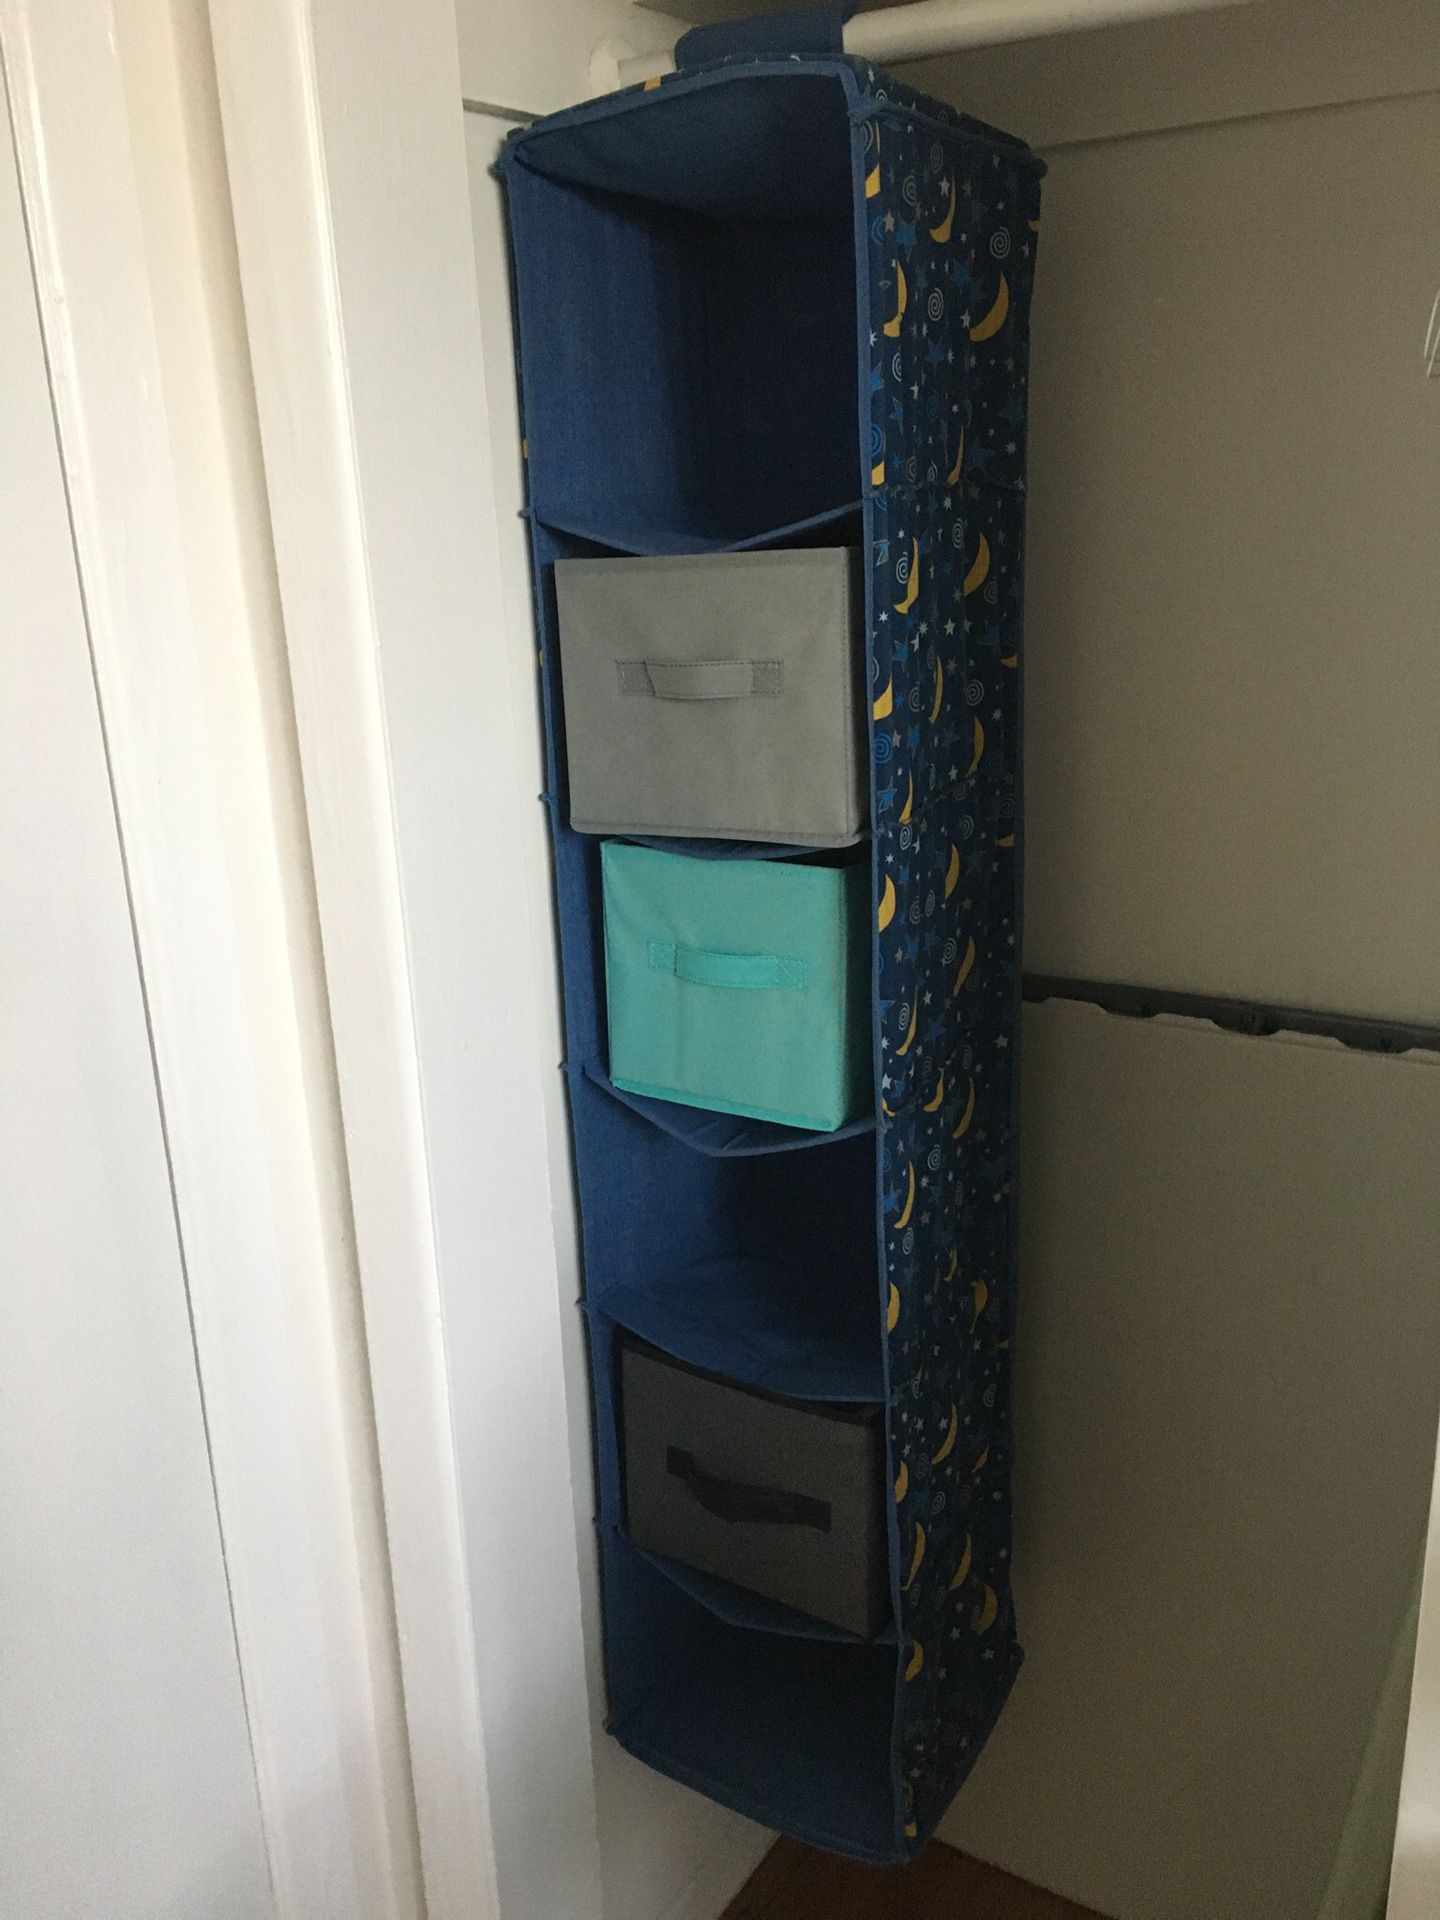 Spacious closet organizer - 2 bins included